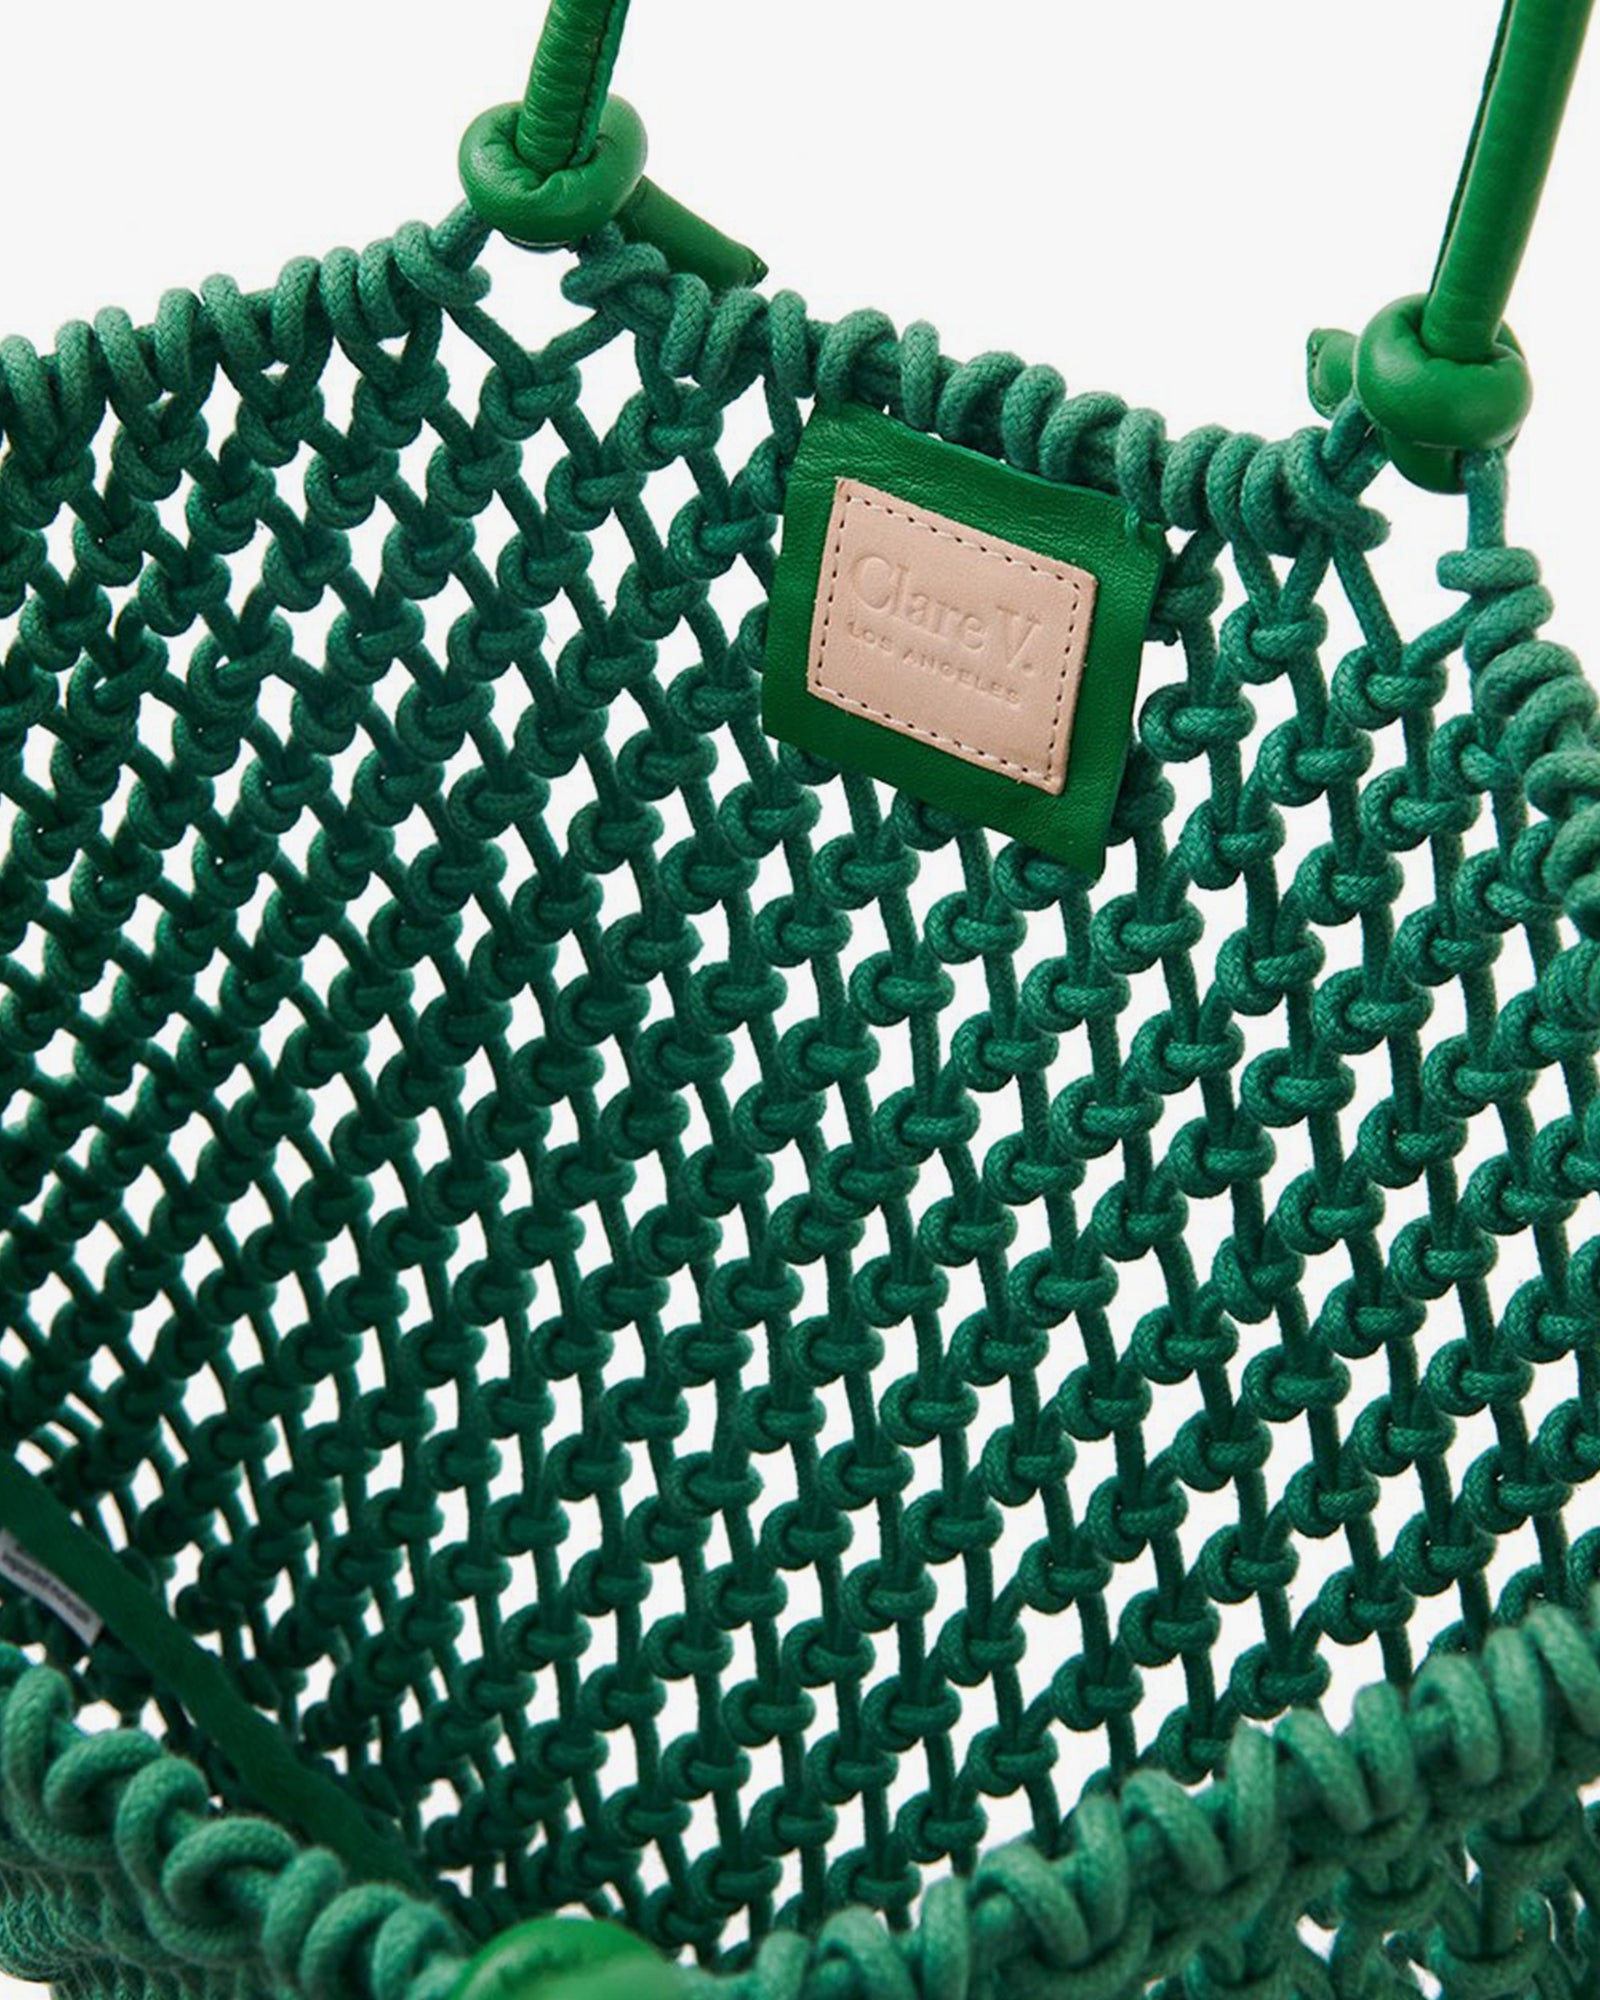 2476 Striped Crochet Handbag with Rope Handles